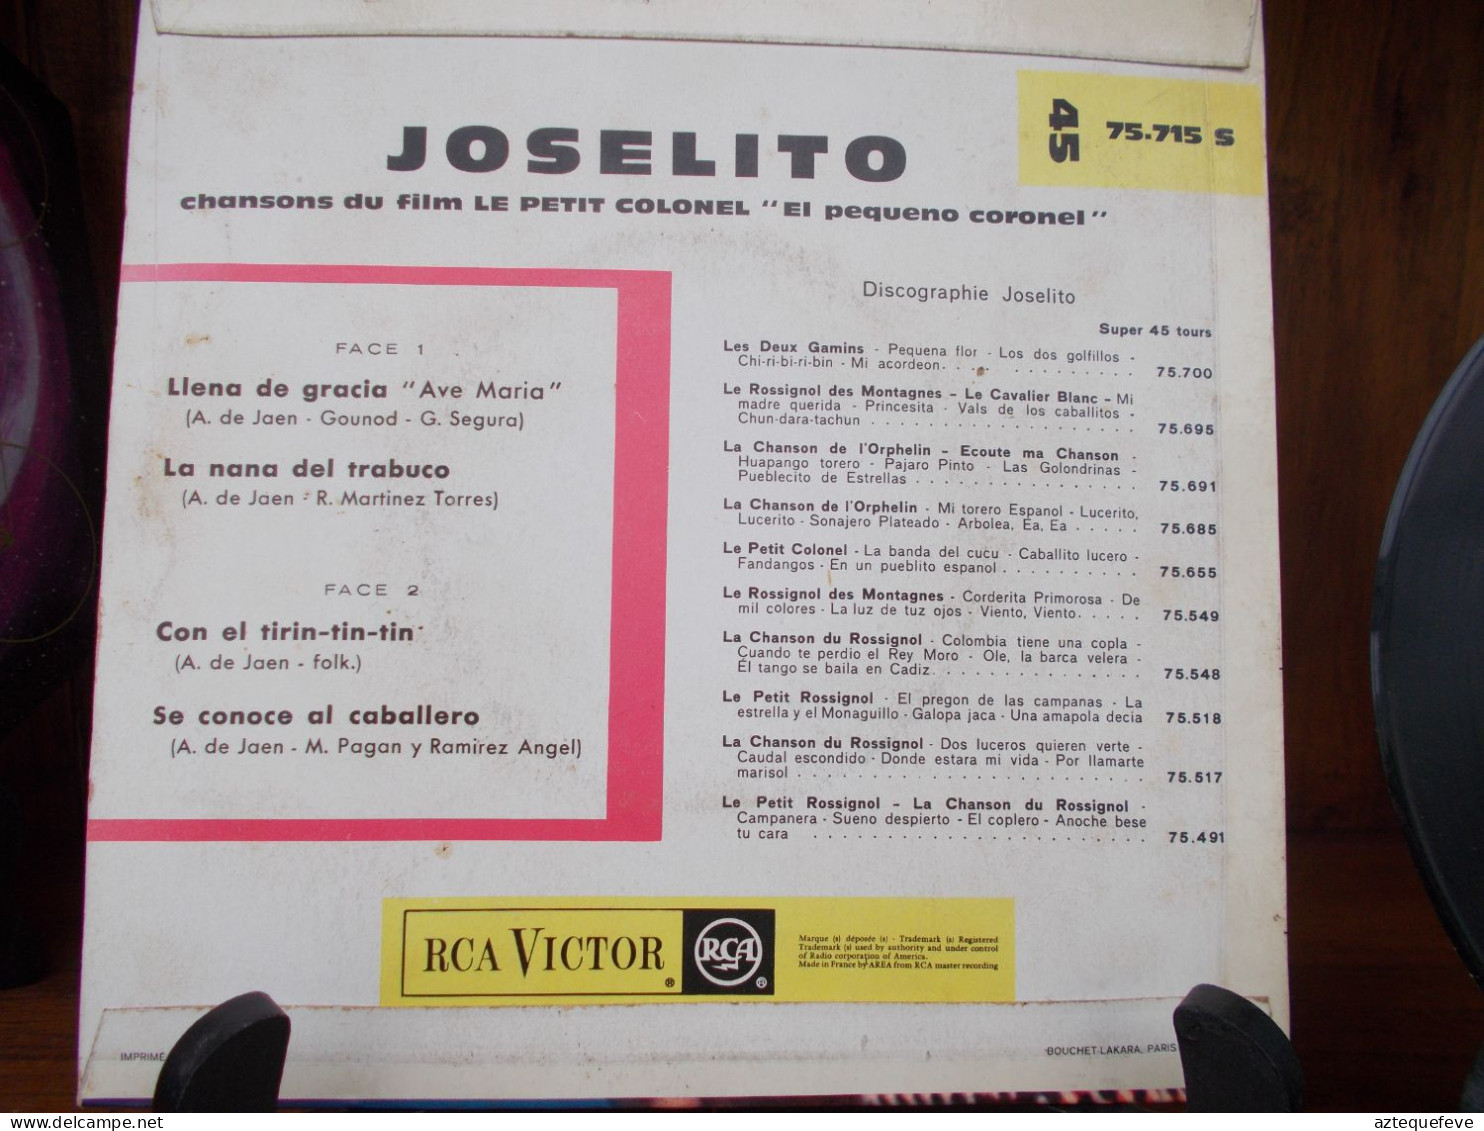 JOSELITO RCA VICTOR "LE PETIT COLONEL" Etc.. 45 T 75.715 S - Formatos Especiales